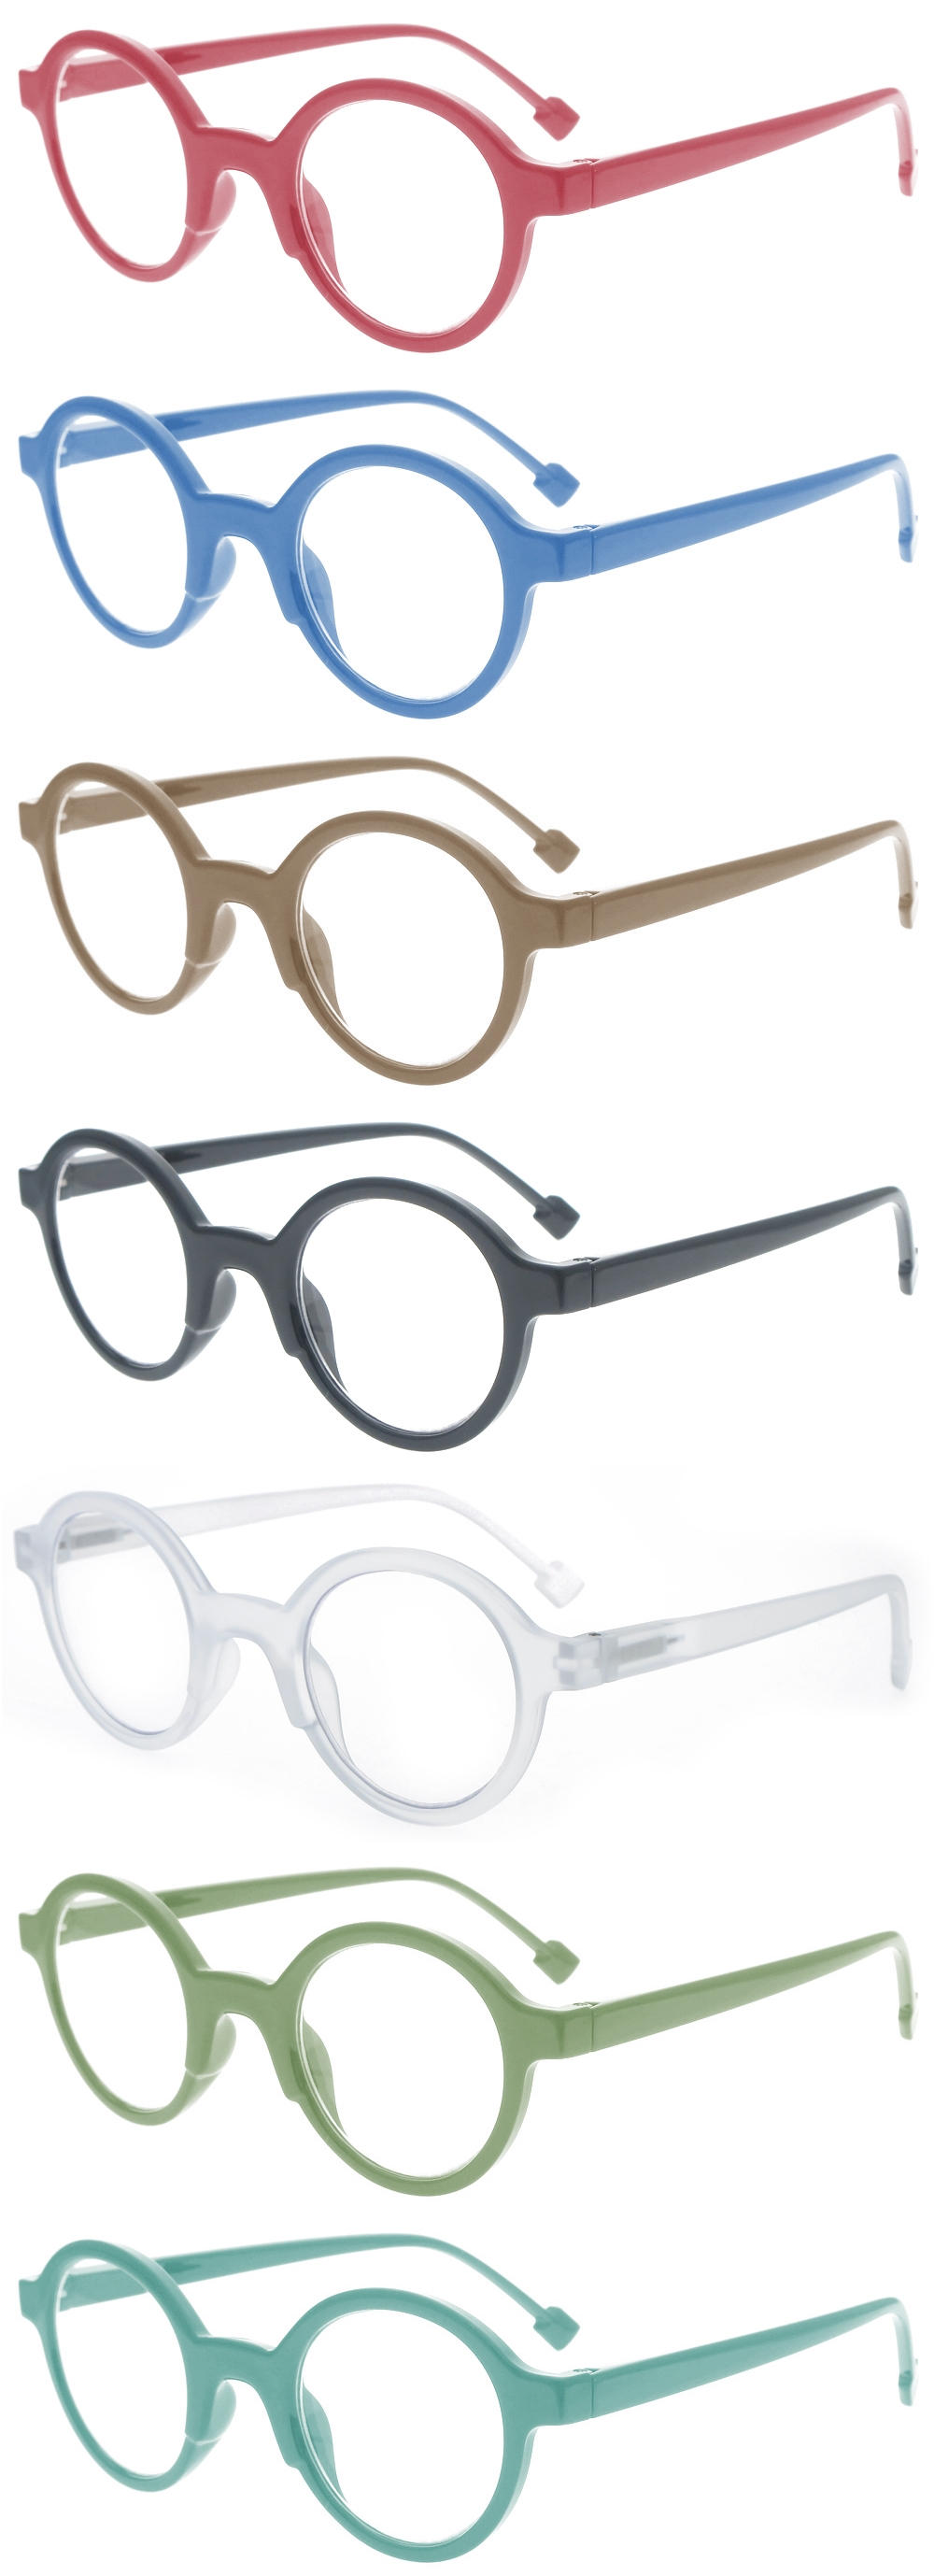 Dachuan Optical DRP131129 China Wholesale Unisex Fashionable Plastic Reading Glasses with Round Shape (3)